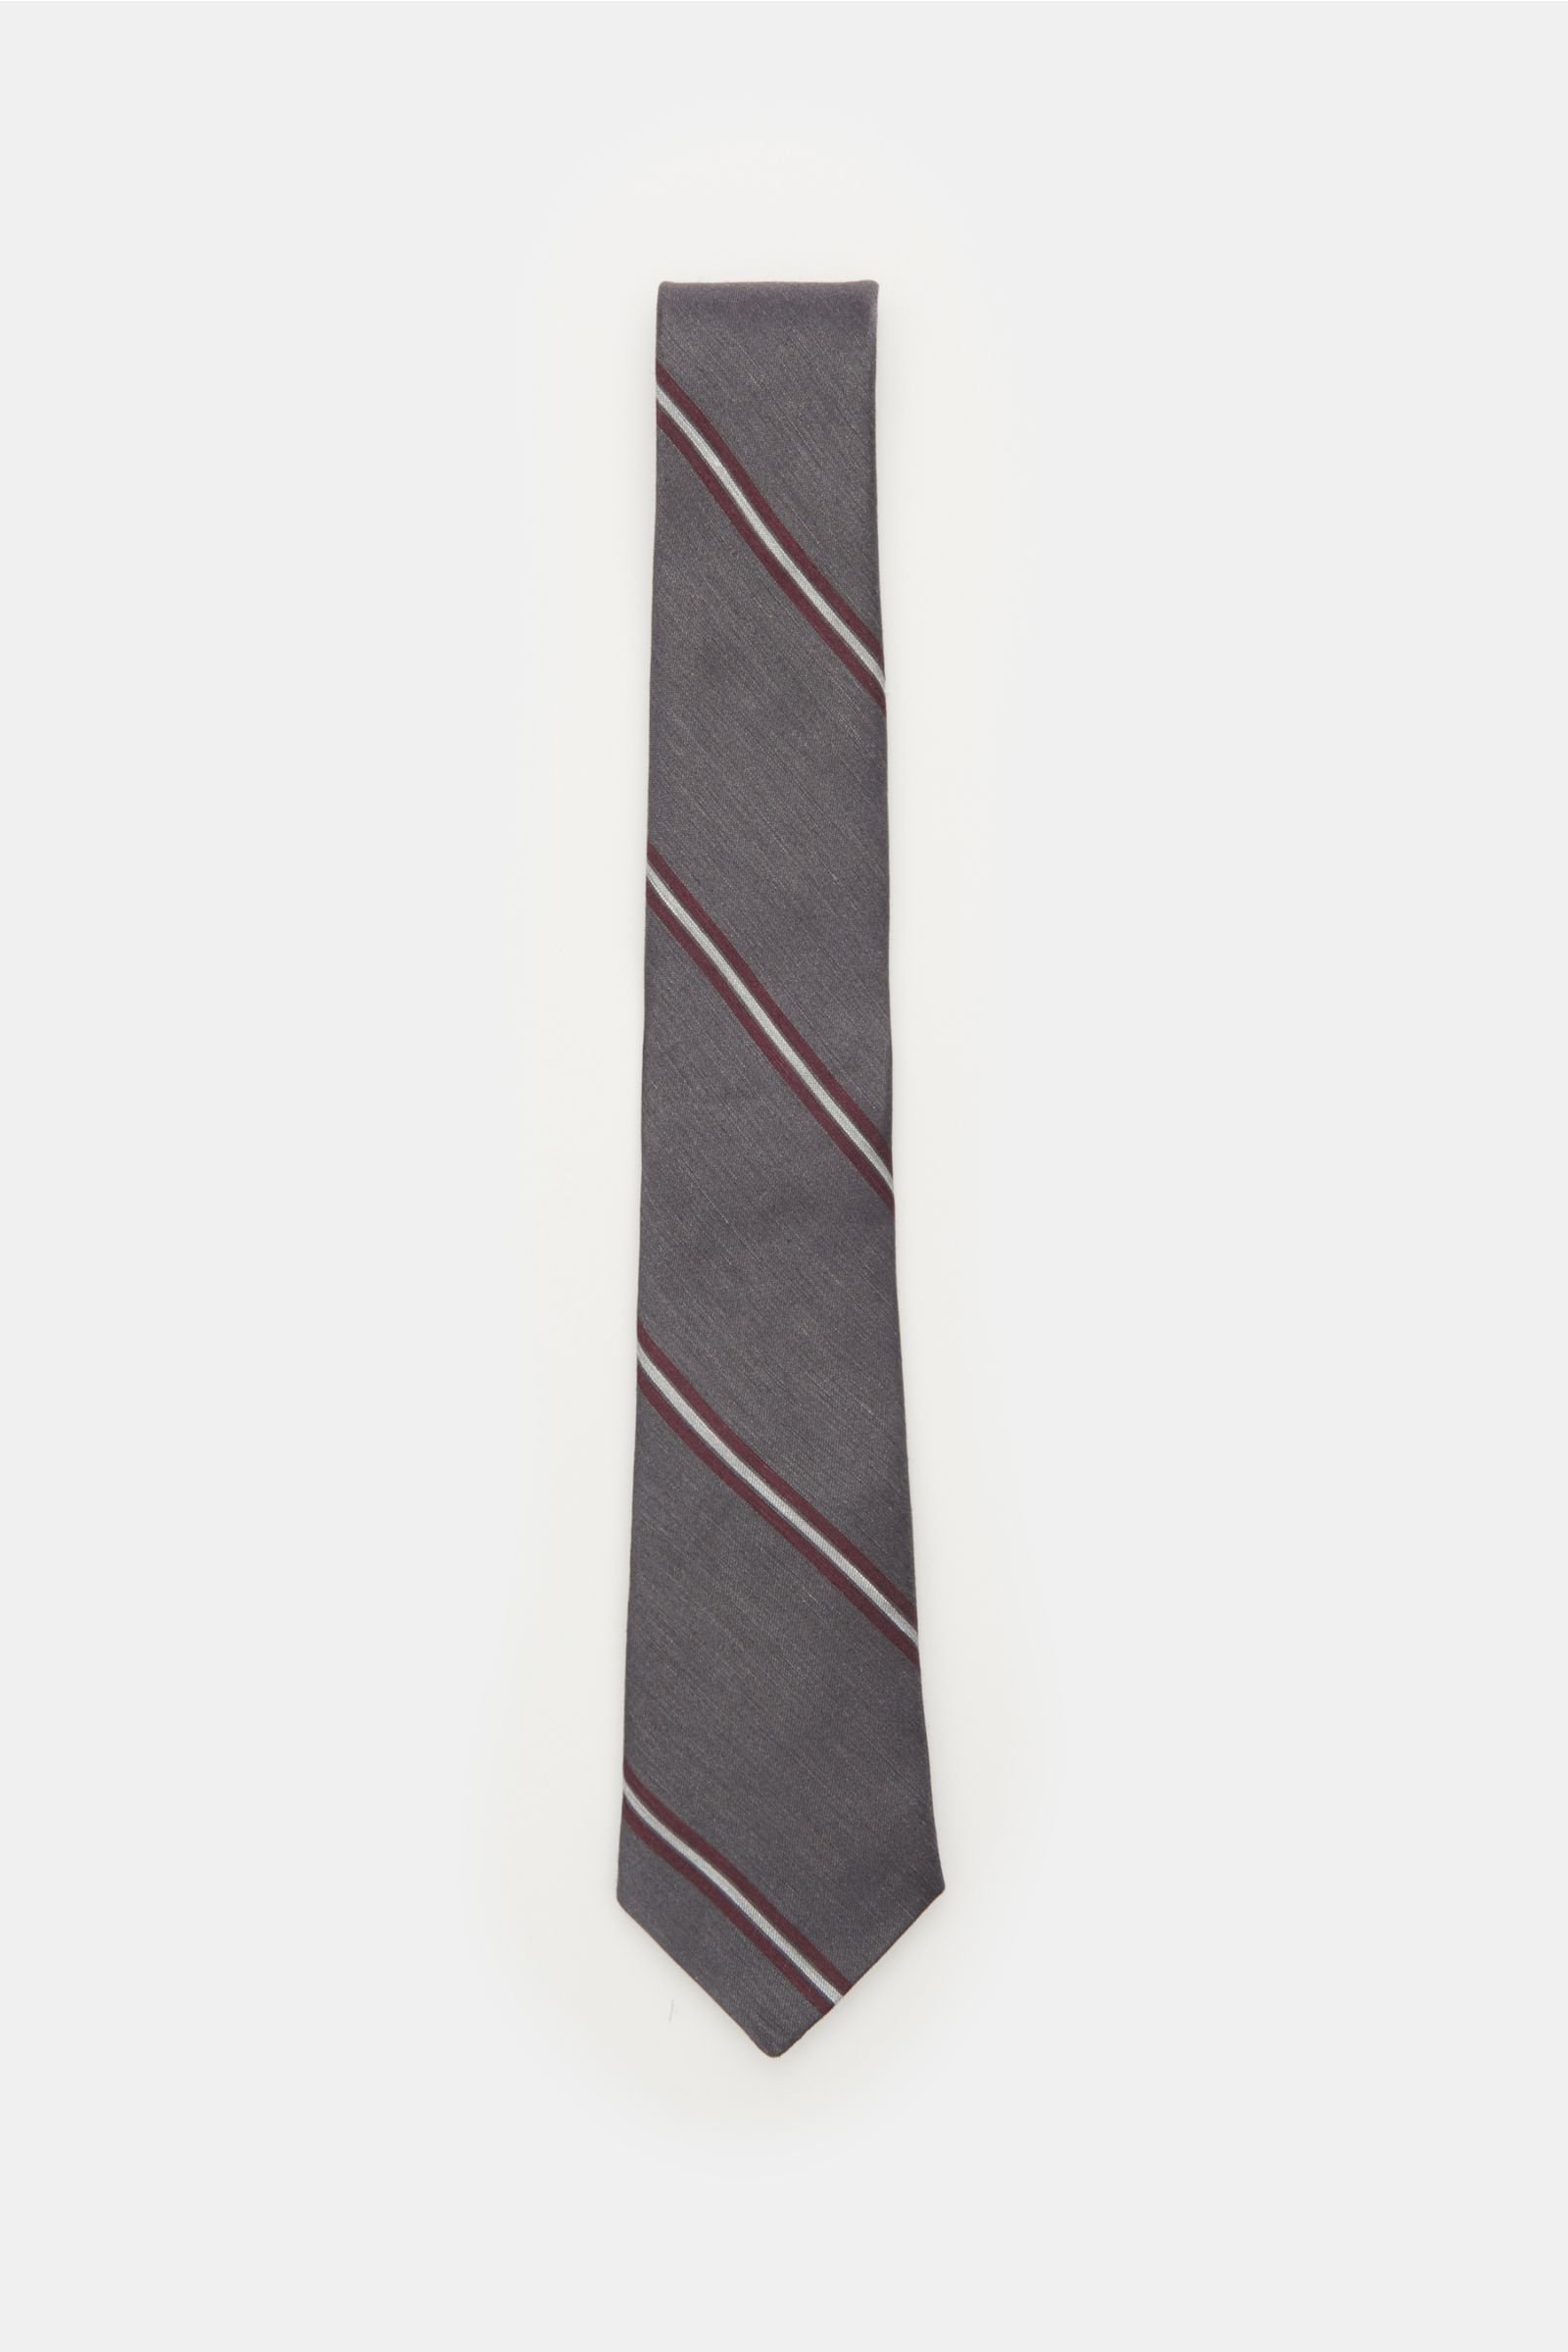 Tie dark grey/burgundy striped